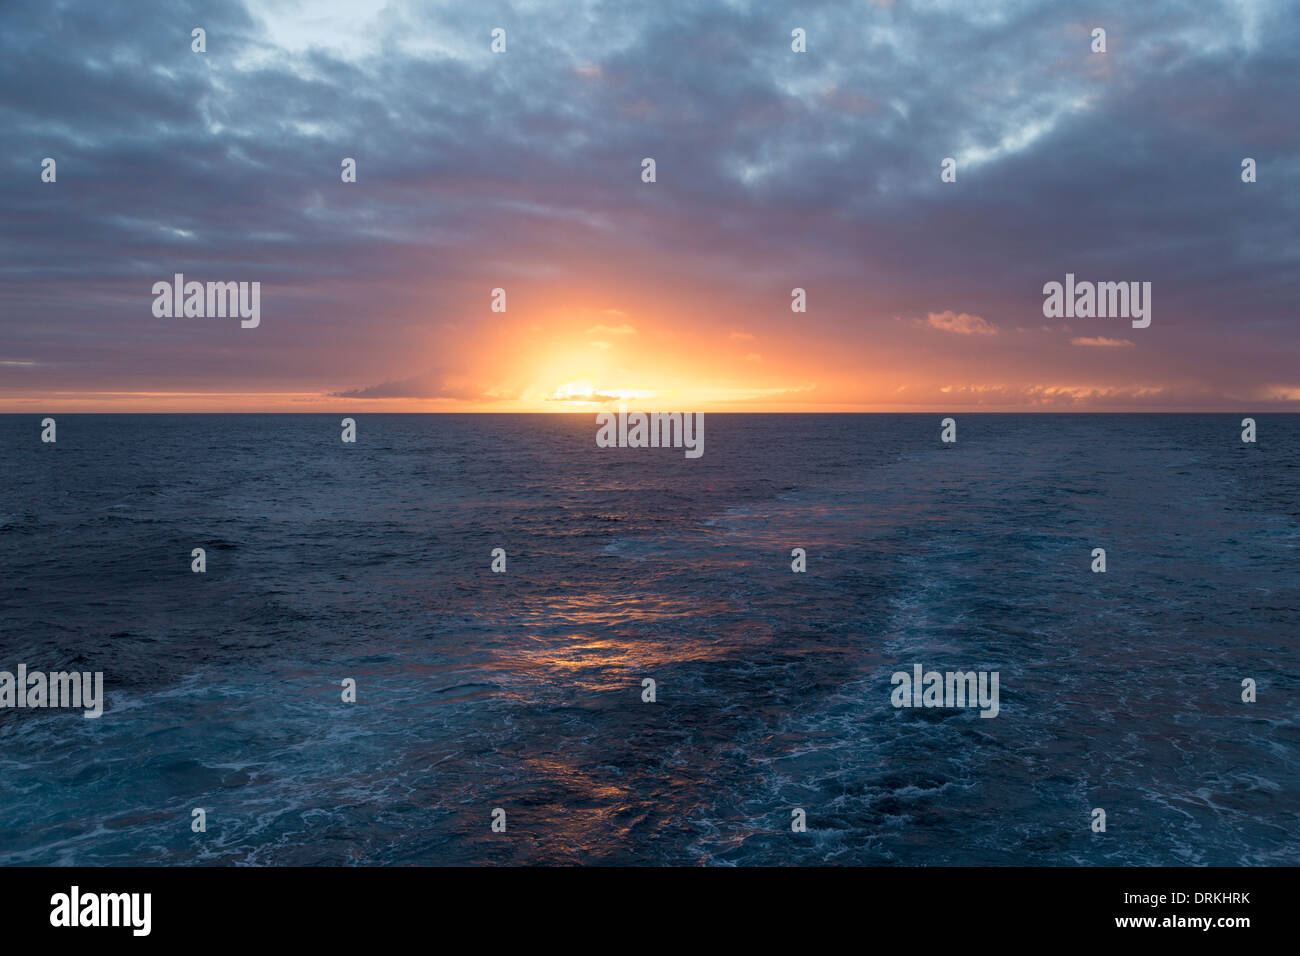 Sunrise and wake from ship at sea Stock Photo